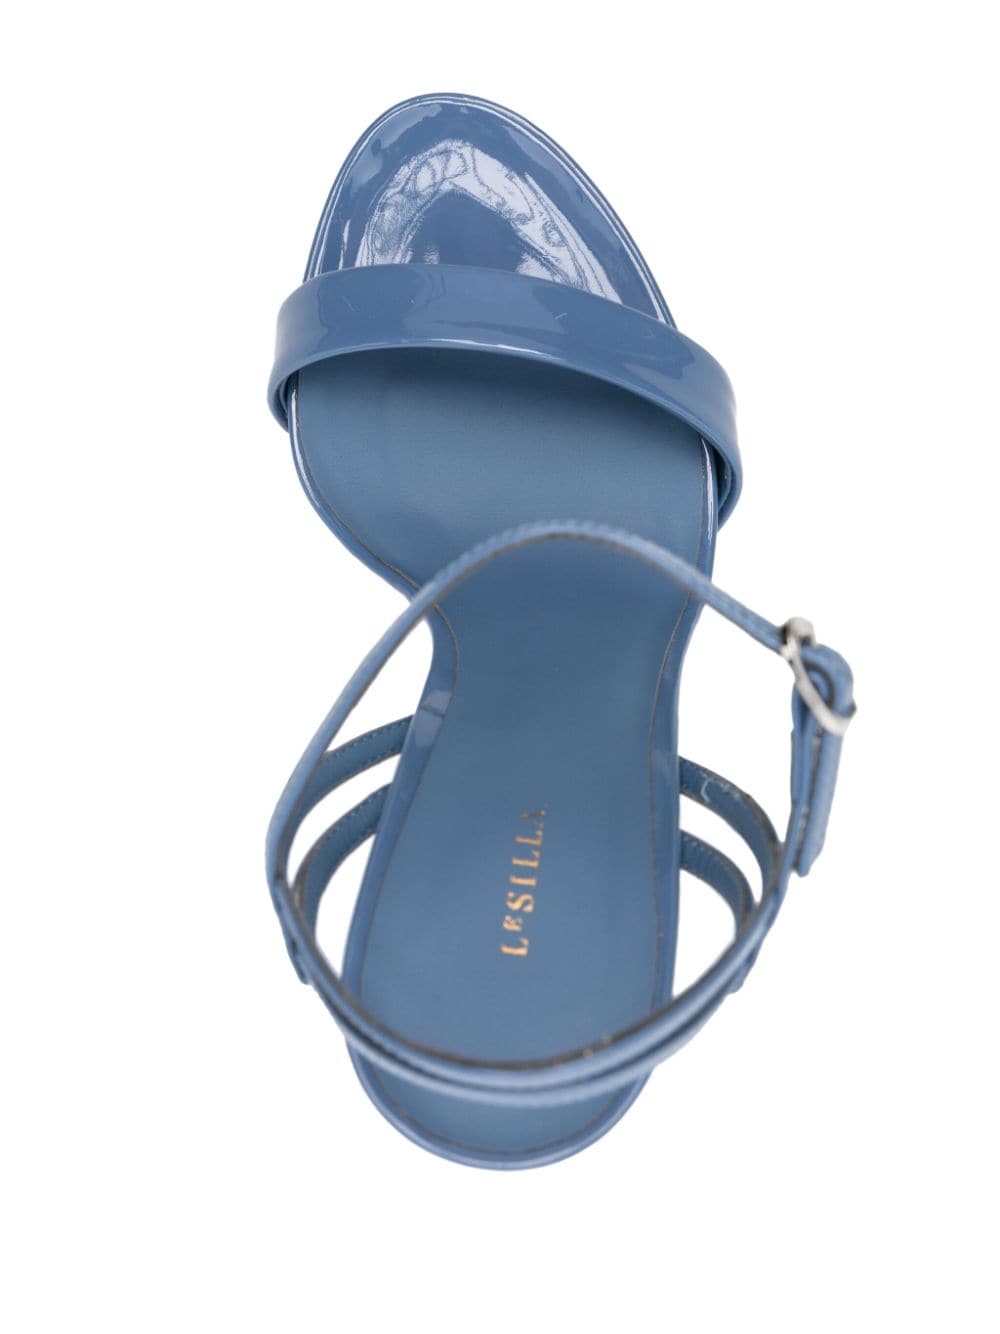 Shop Le Silla Gwen 120mm Patent-leather Sandals In Blue